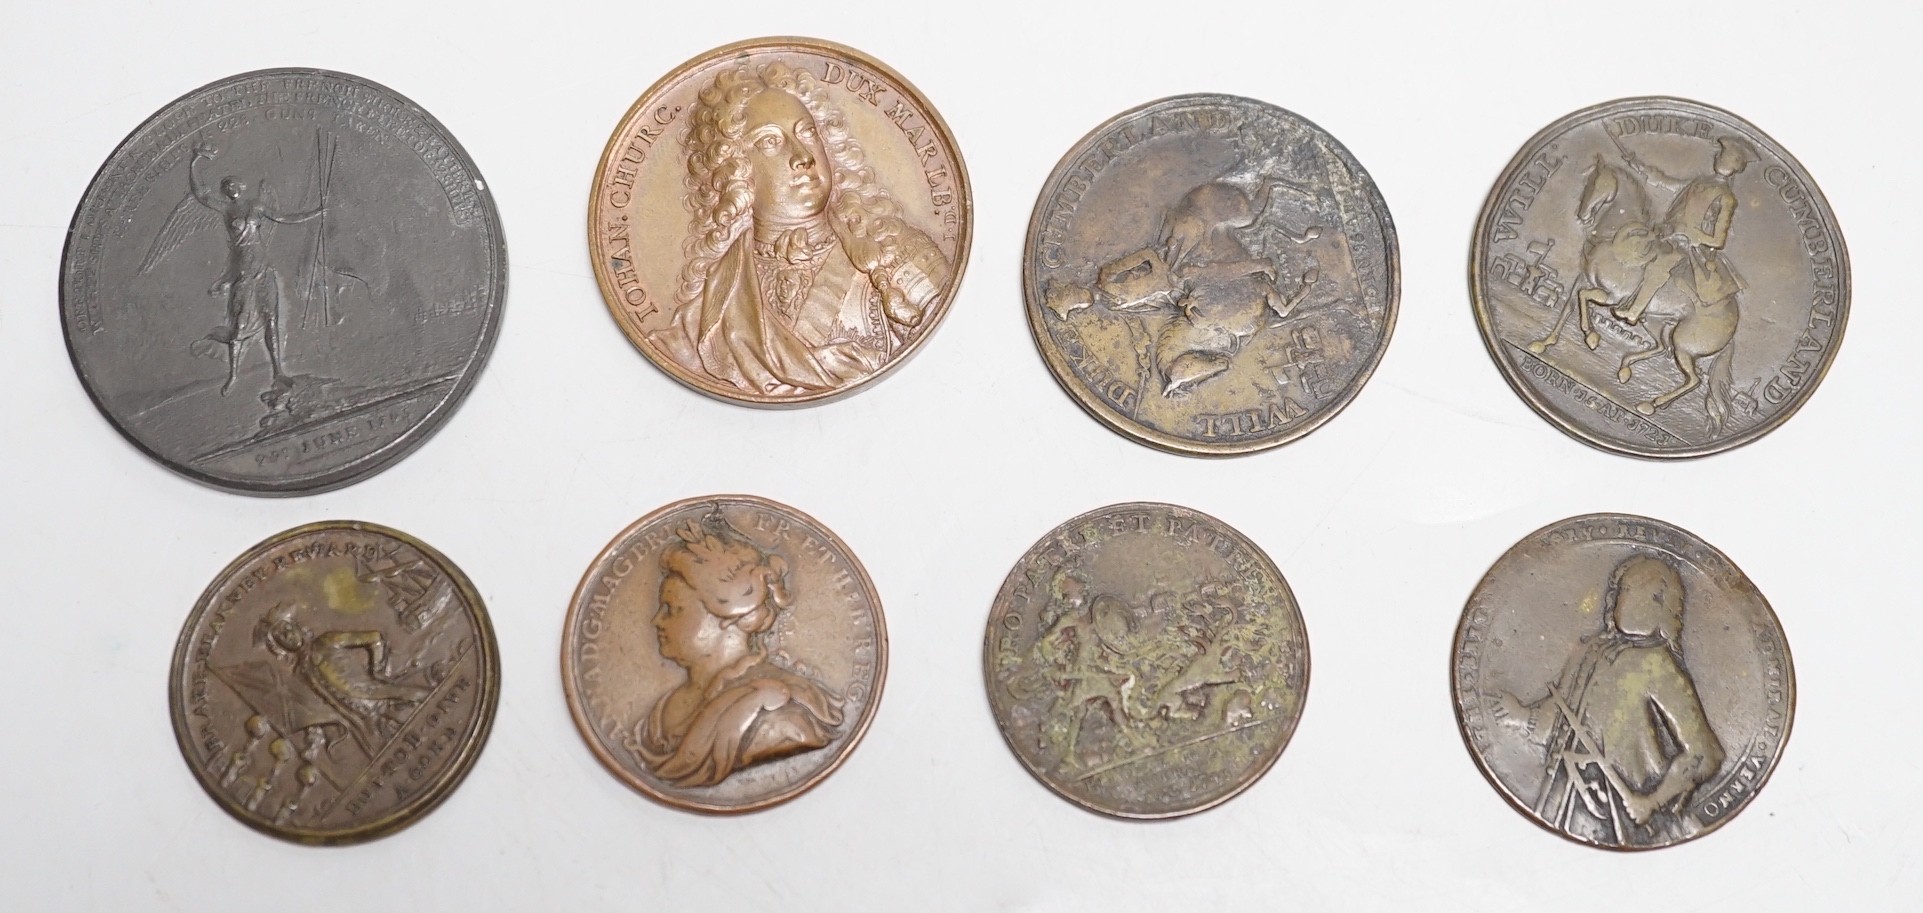 Eight 18th century British Historical medals